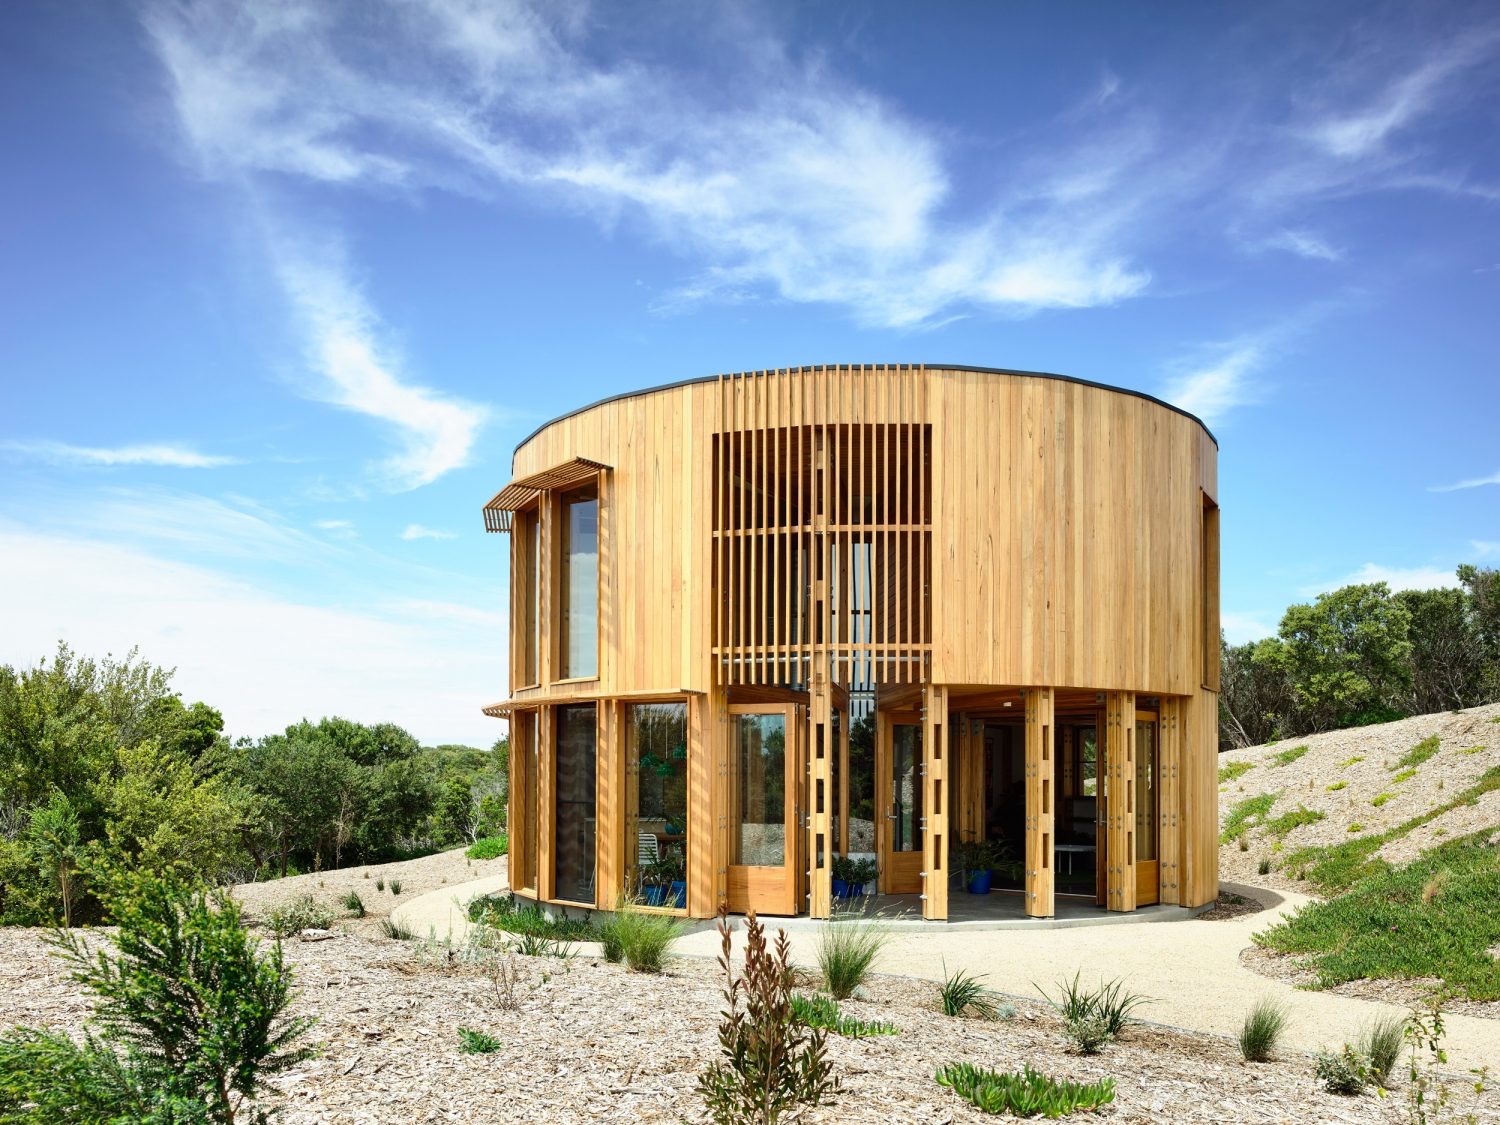 St. Andrews Beach House by Austin Maynard Architects